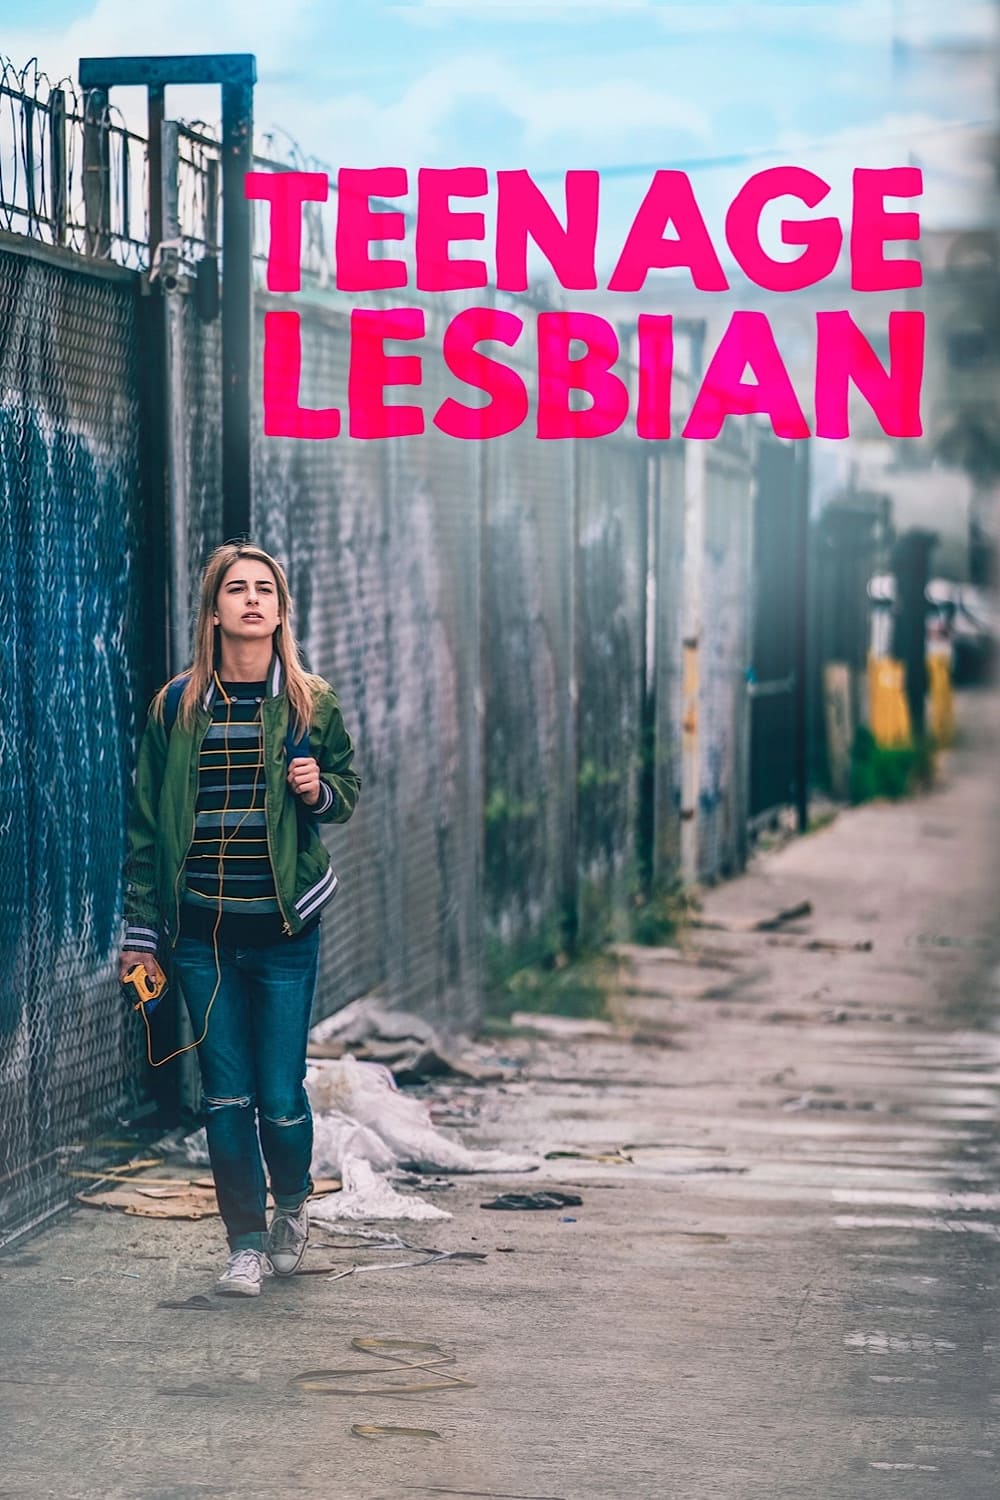 Teenage Lesbian (2019) постер